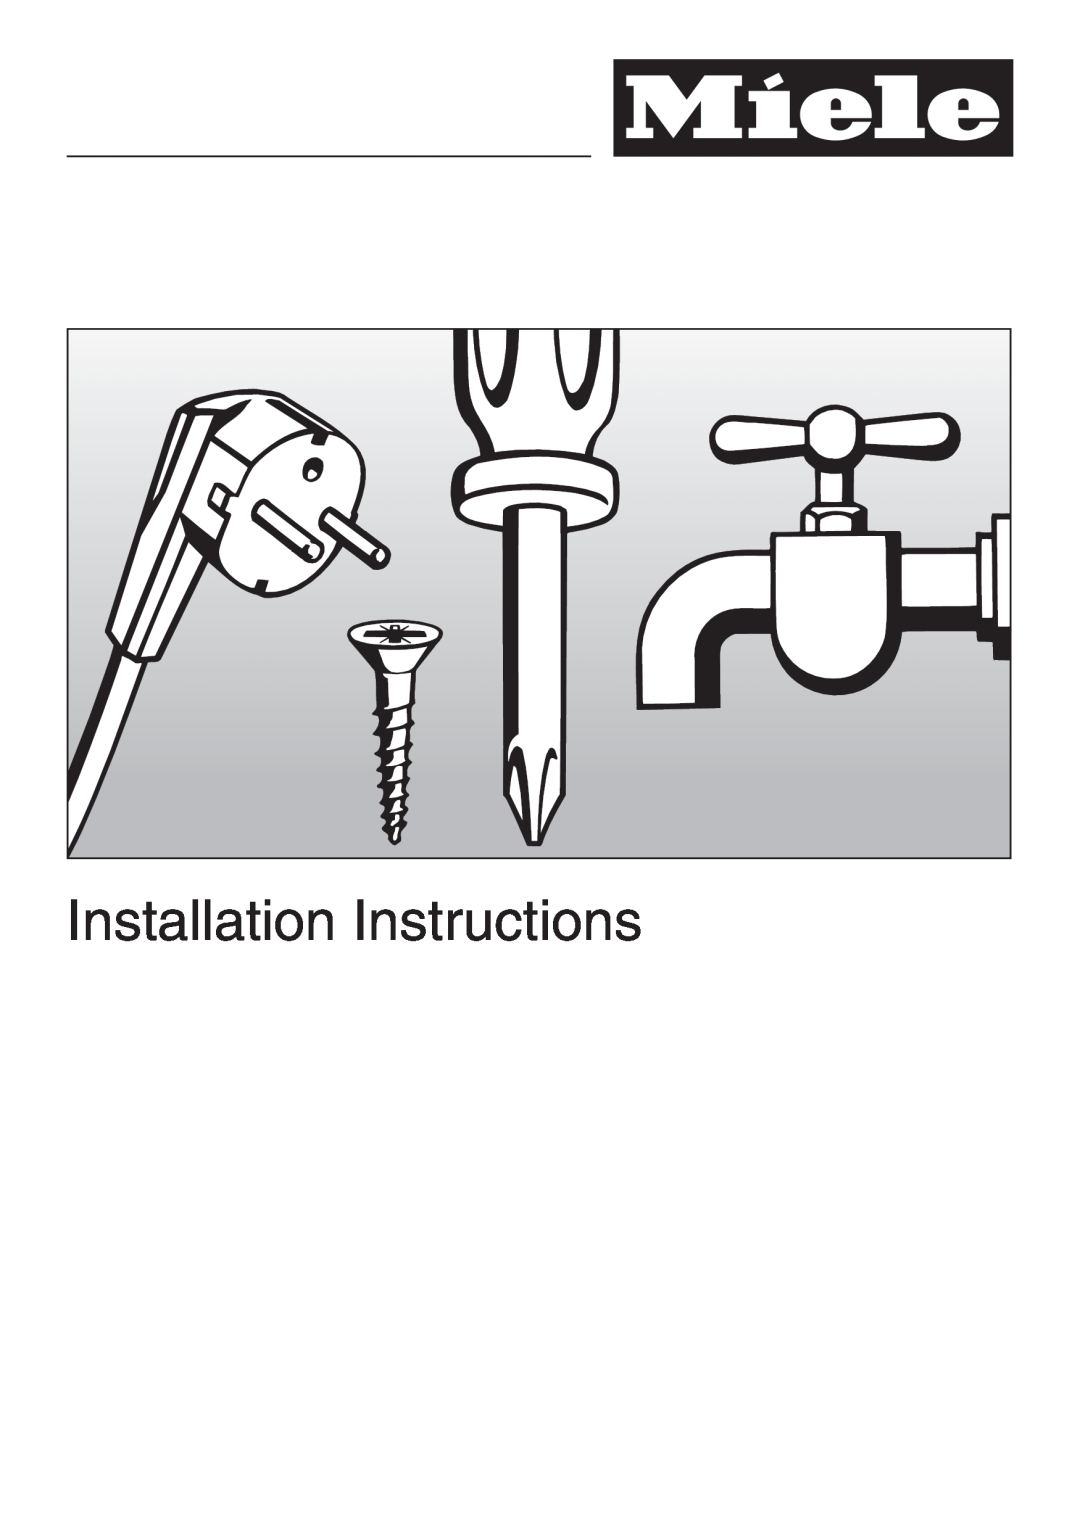 Miele DA 3160, DA 3180, DA3190 installation instructions Installation Instructions 